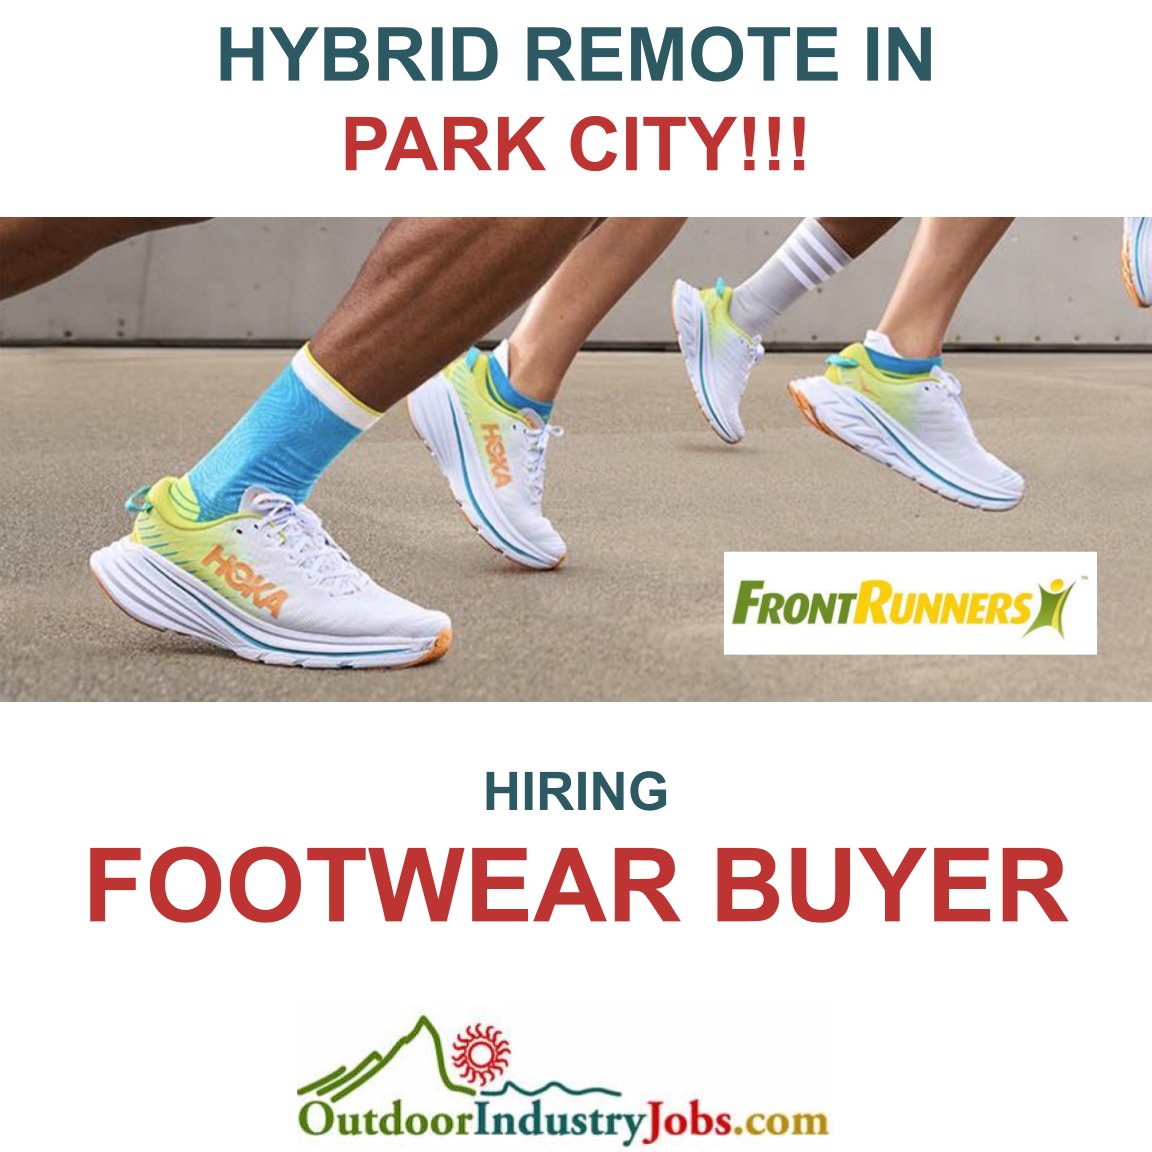 Apply Here: outdoorindustryjobs.com/JobDetail/GetJ…

#outdoorindustryjobs #frontrunners #footwearindustry #footwearjobs #runningshoes #runutah  #runningshoe #footwear #utah #runningjobs #runningindustry 
@FrontRunnersLA